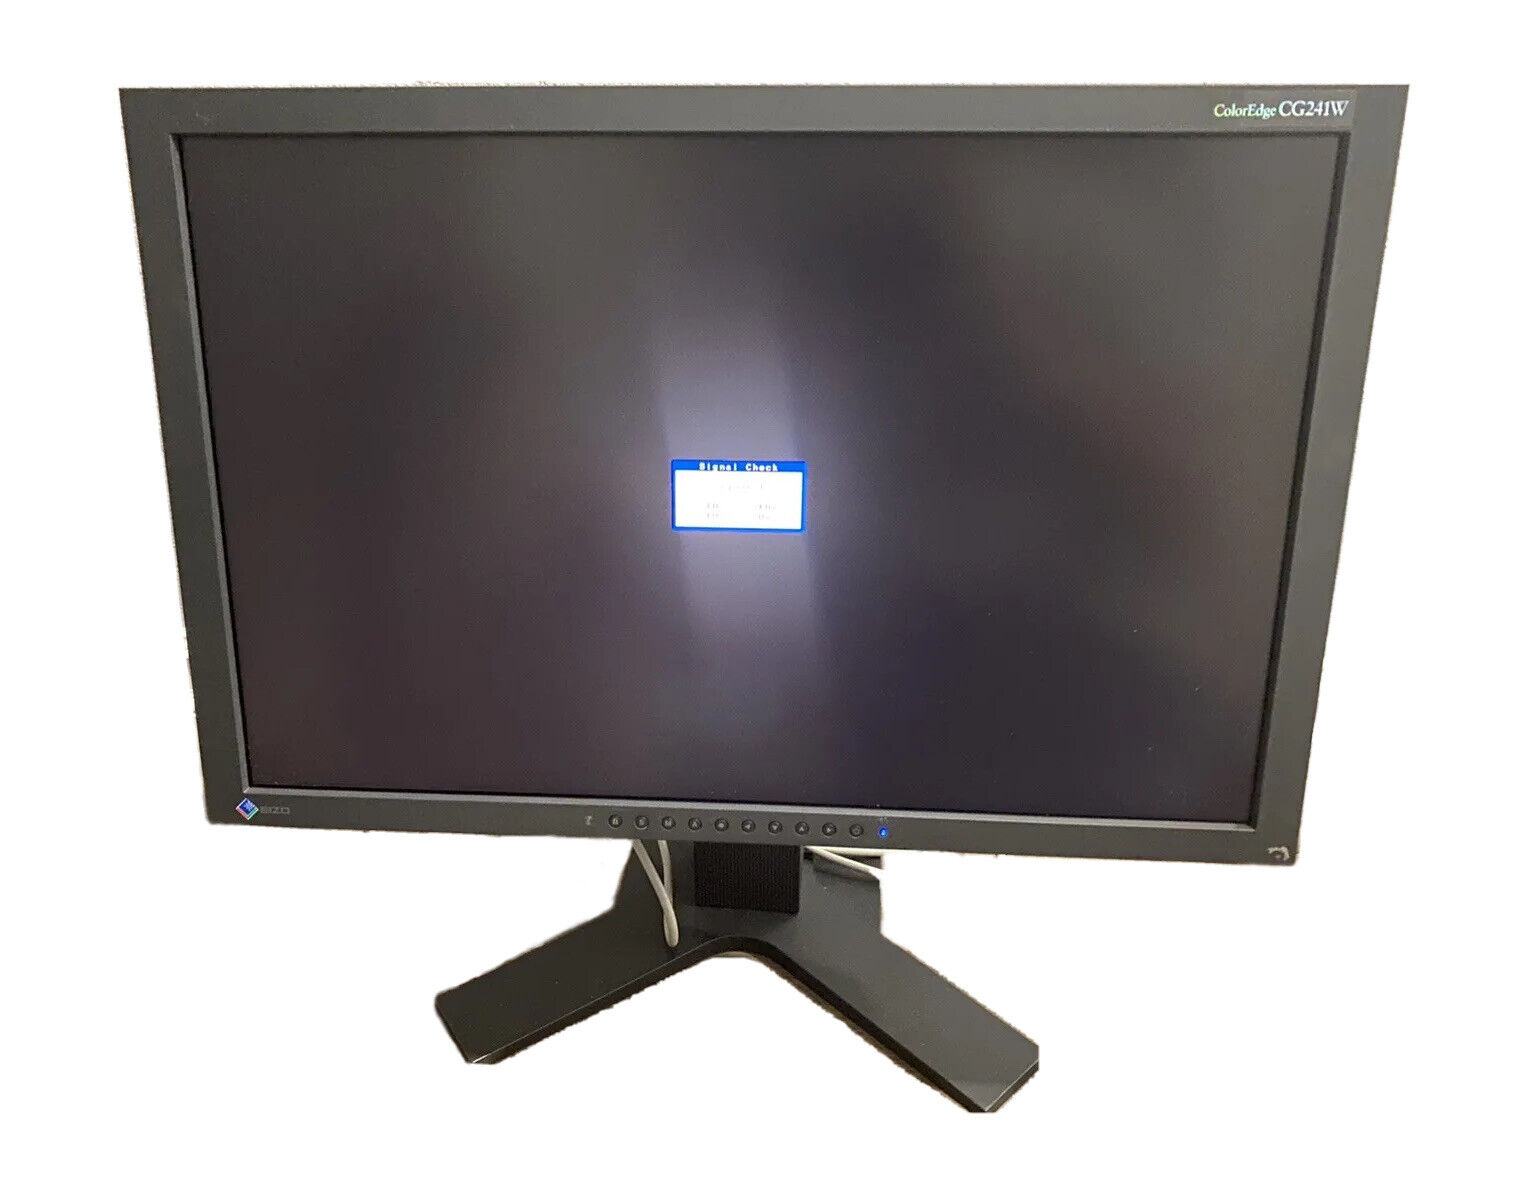 EIZO ColorEdge CG241W 24.1 inch LCD Display